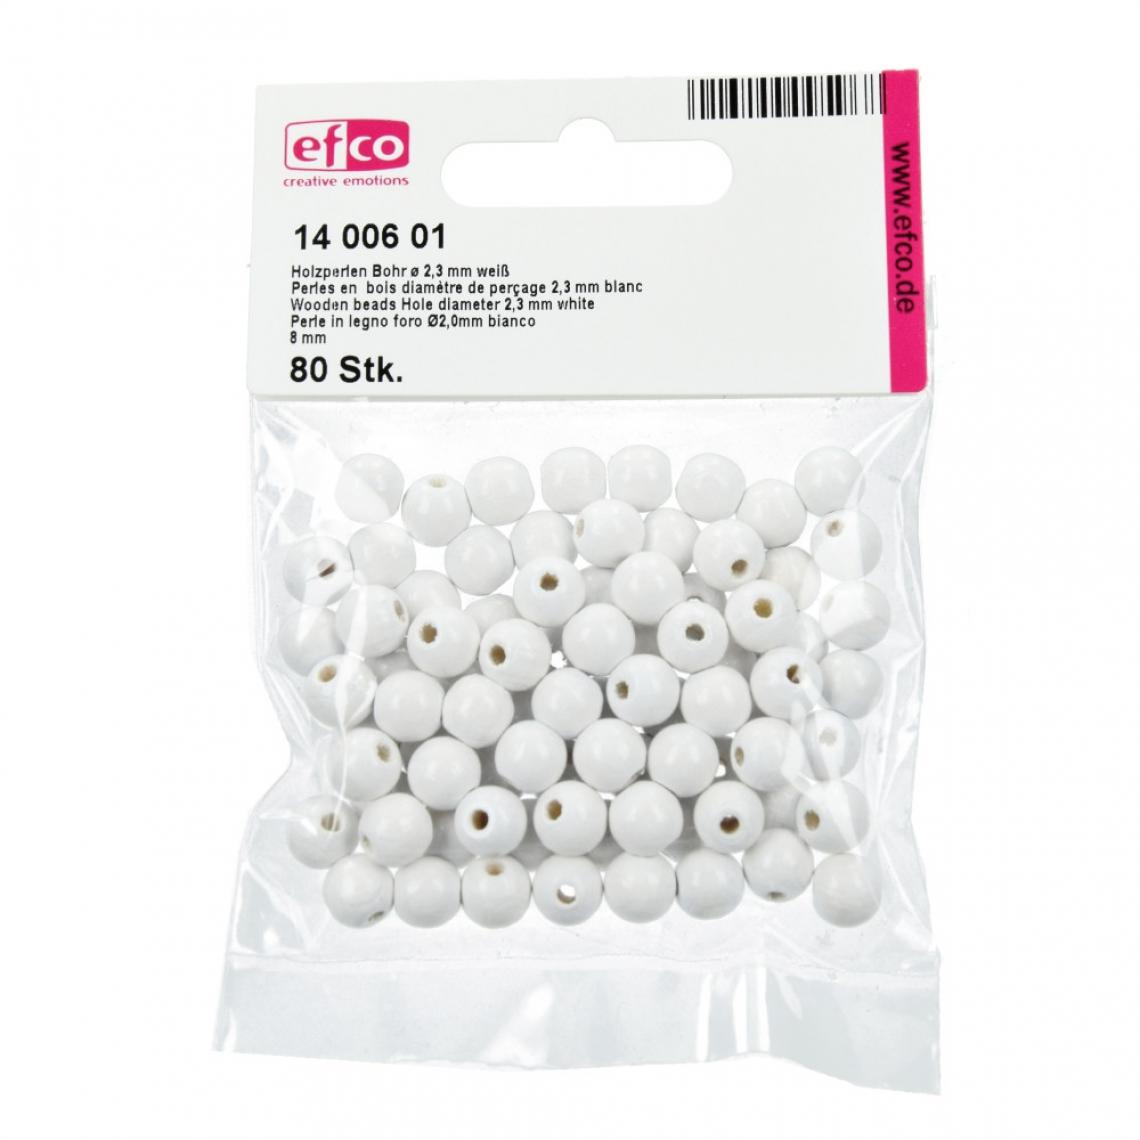 efco - Lot de 80 Perles en bois diam. 8 mm, diam. de perçage 2,3 mm - Briques et blocs